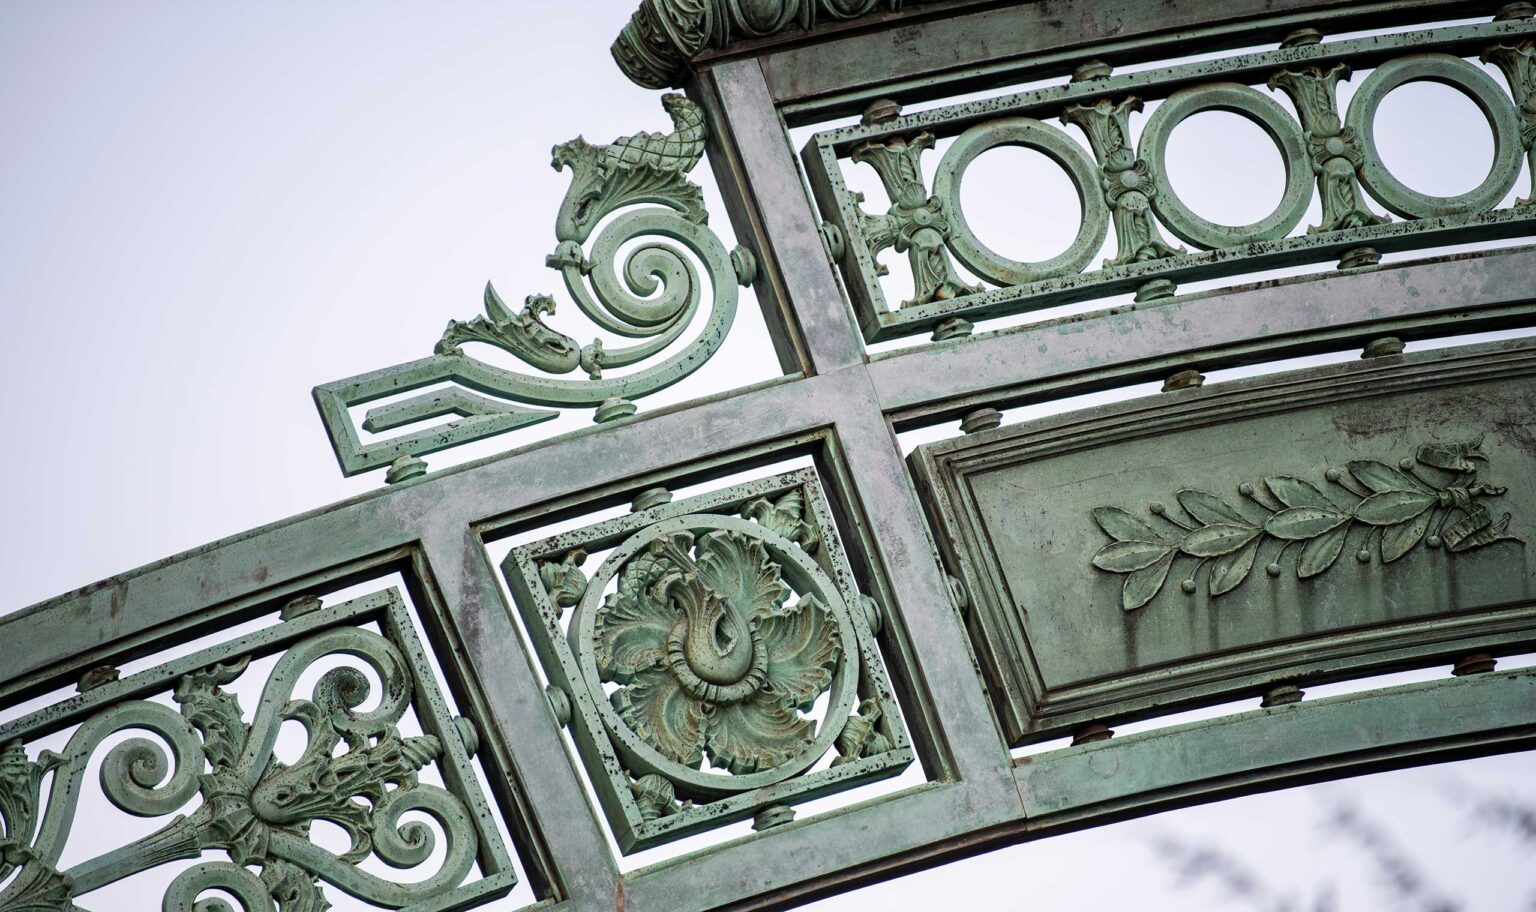 ironwork detail on sather gate